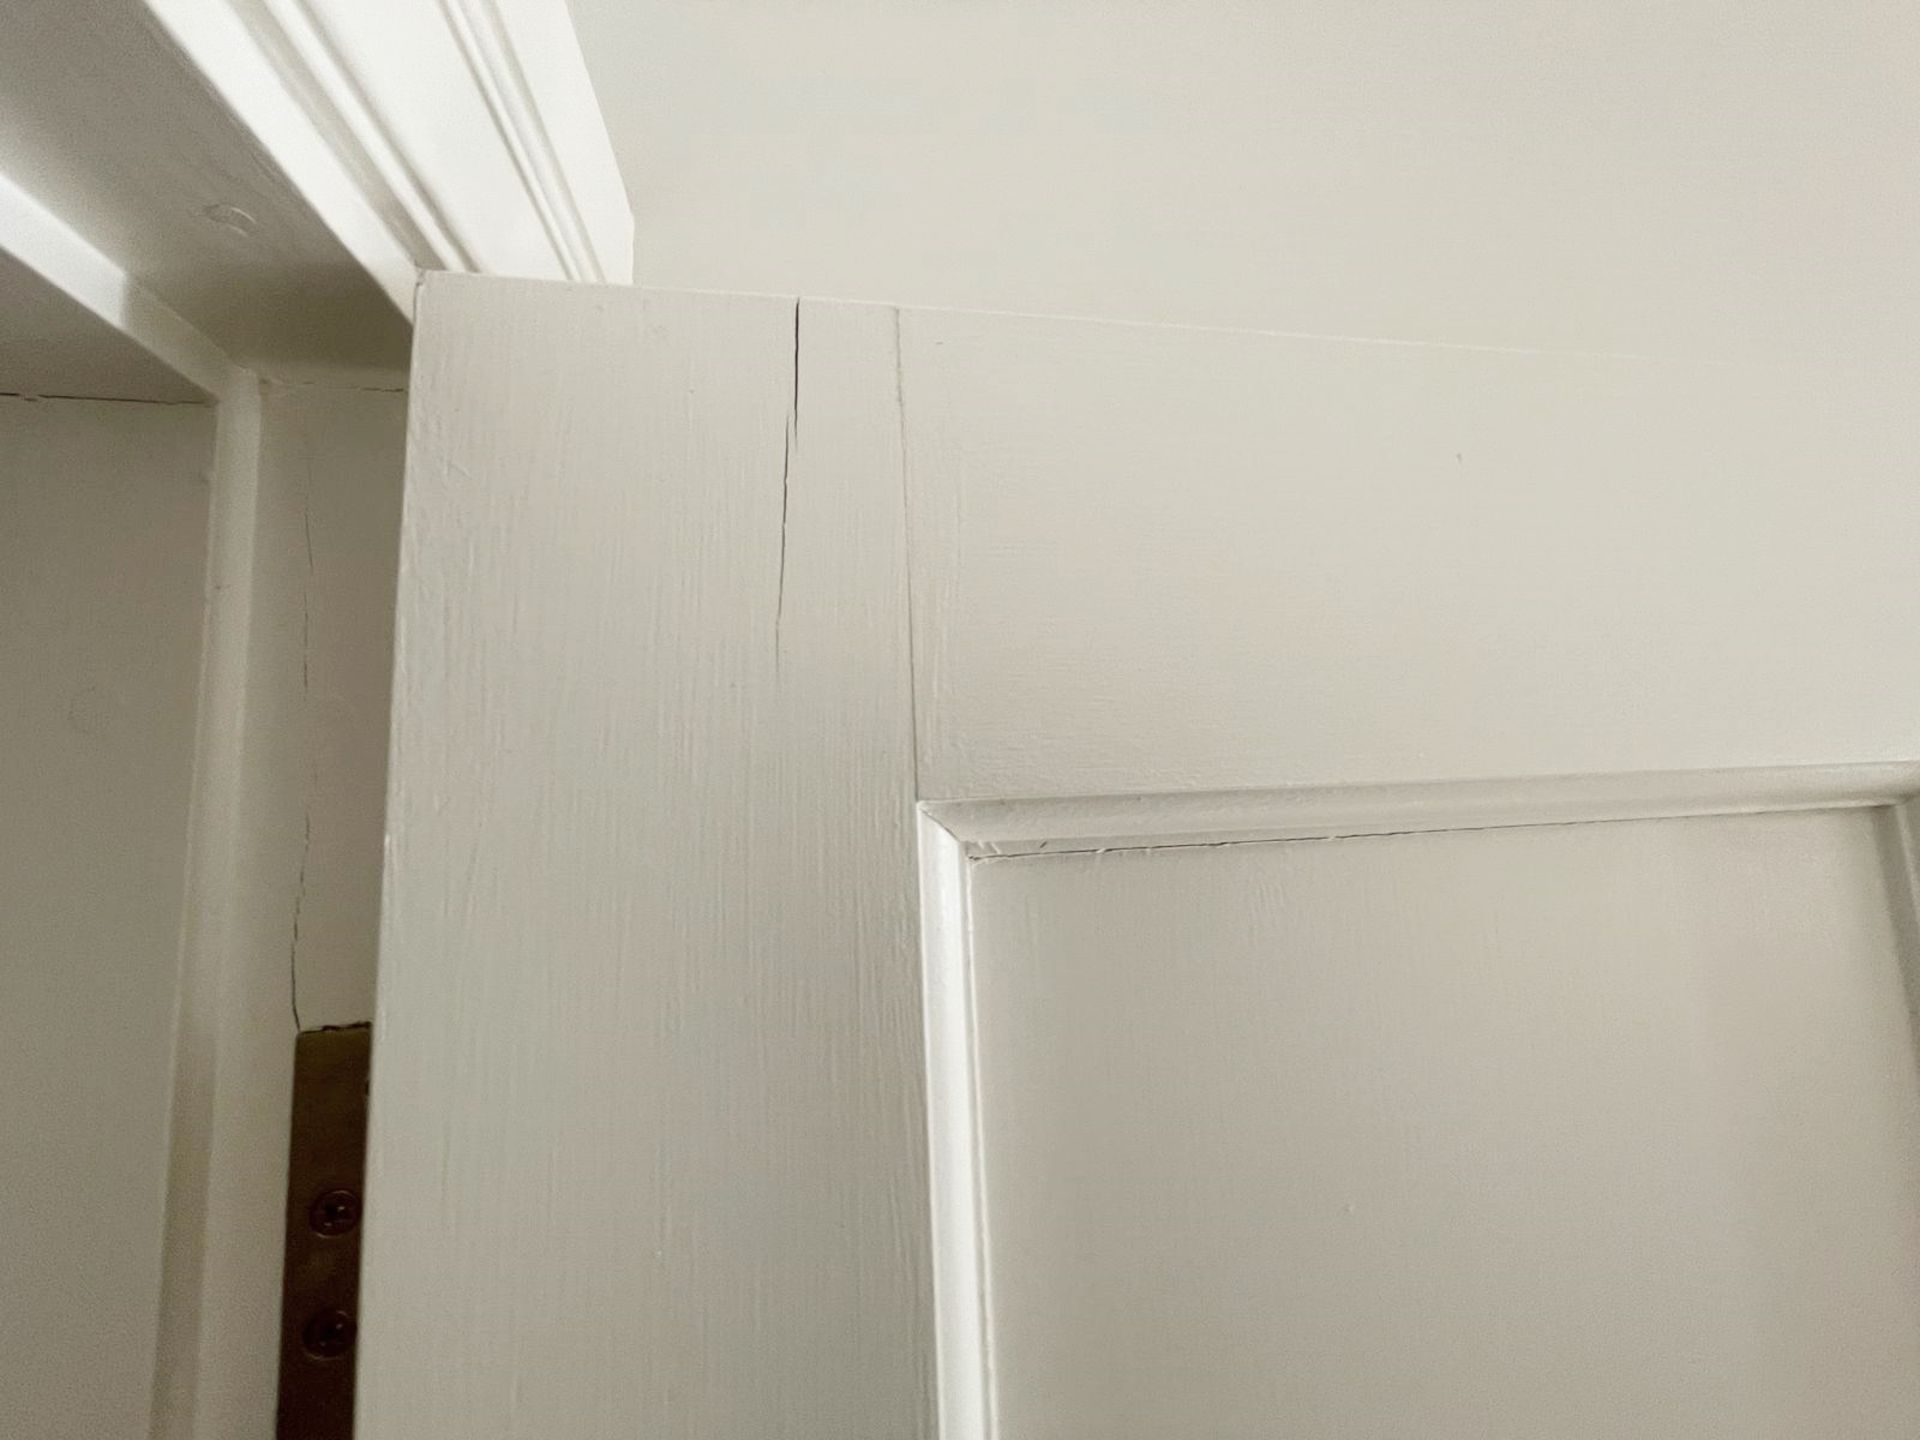 1 x Solid Wood Lockable Painted Internal Bathroom Door in White - Includes Handles and Hinges - Ref: - Image 12 of 17